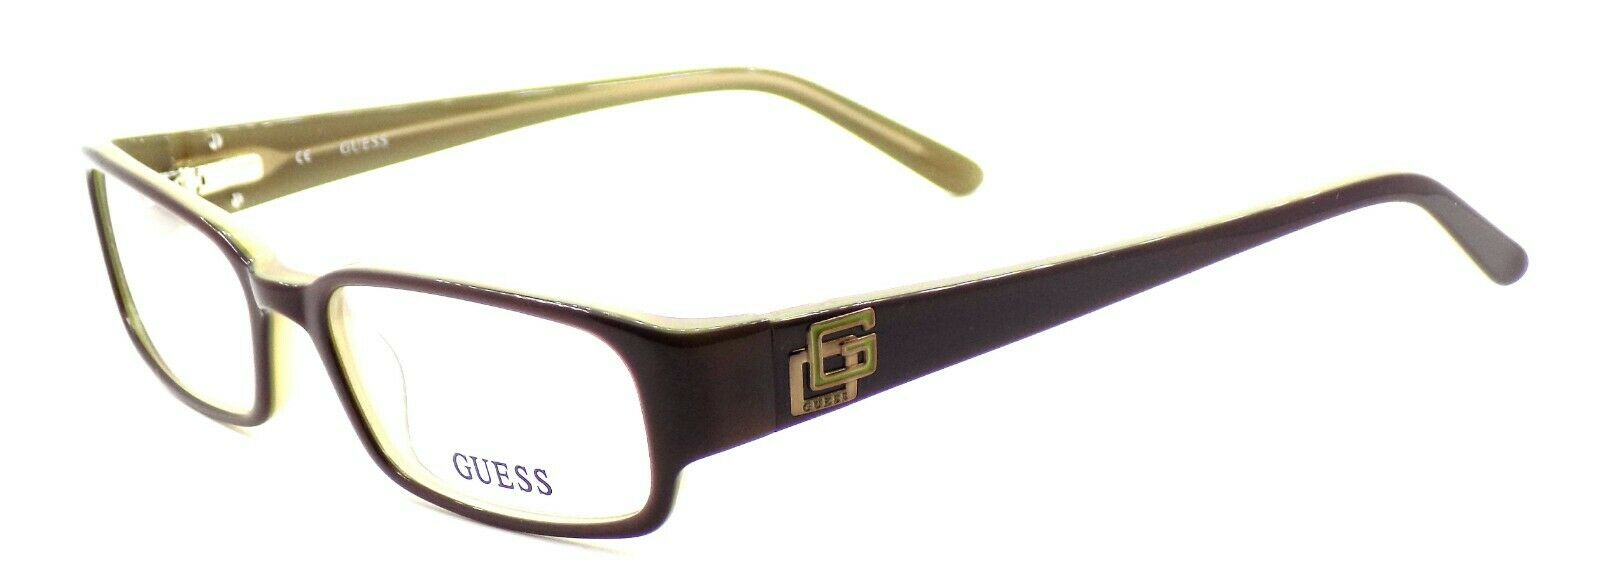 1-GUESS GU1686 BRN Women's Eyeglasses Frames Plastic 51-16-135 Brown + CASE-715583264267-IKSpecs